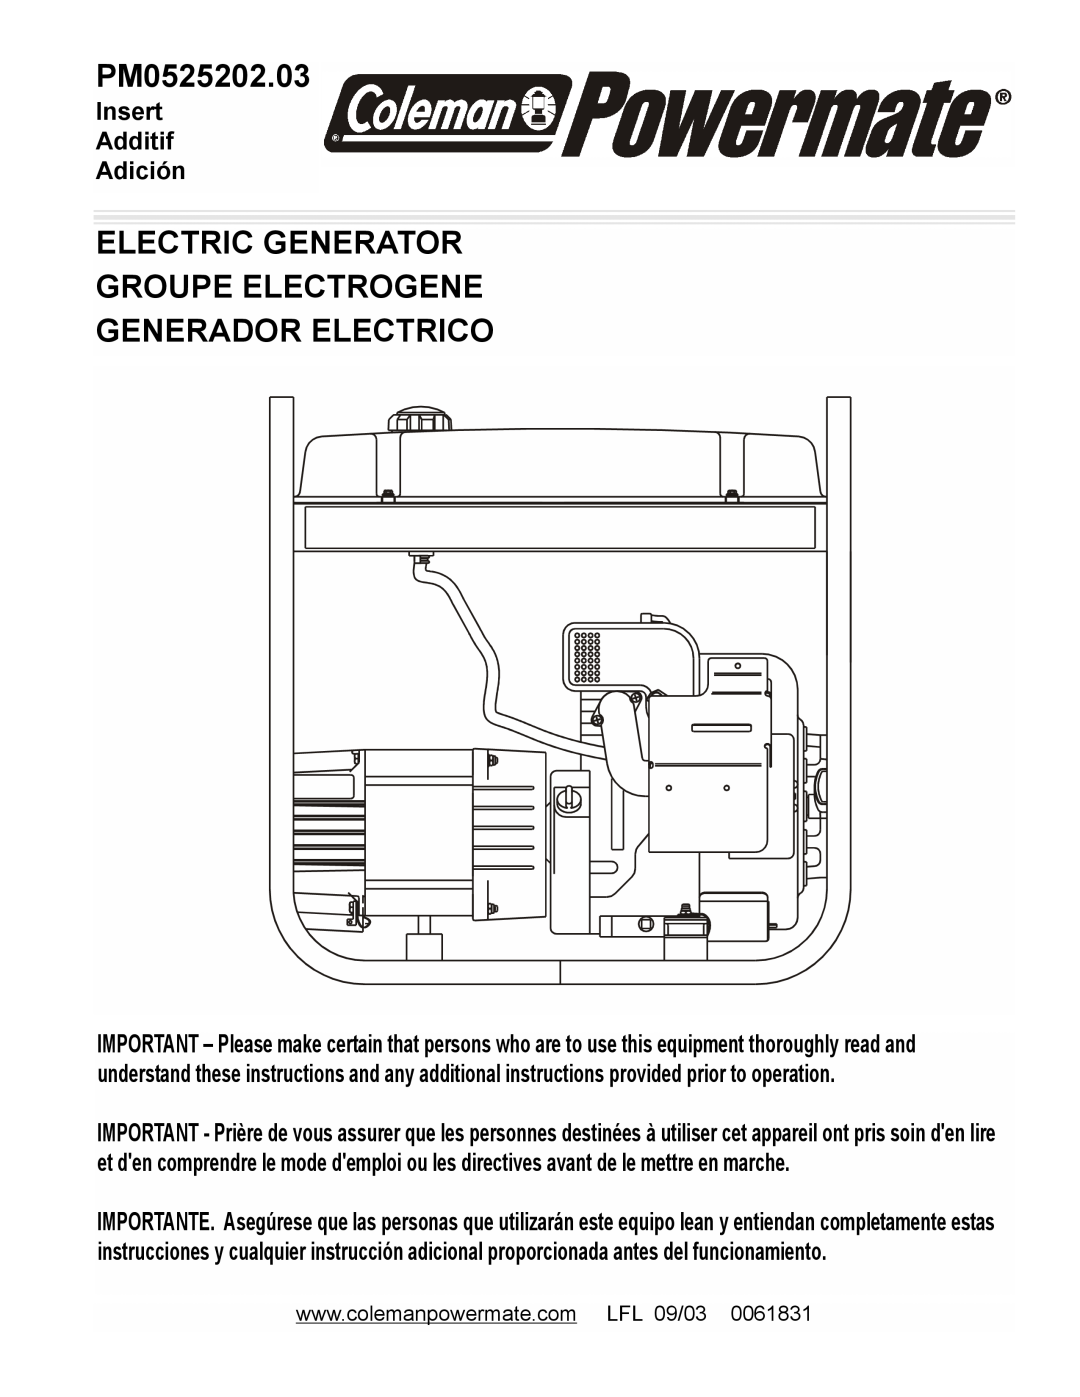 Powermate PM0525202.03 manual Electric Generator Groupe Electrogene, Generador Electrico, Insert Additif Adición 